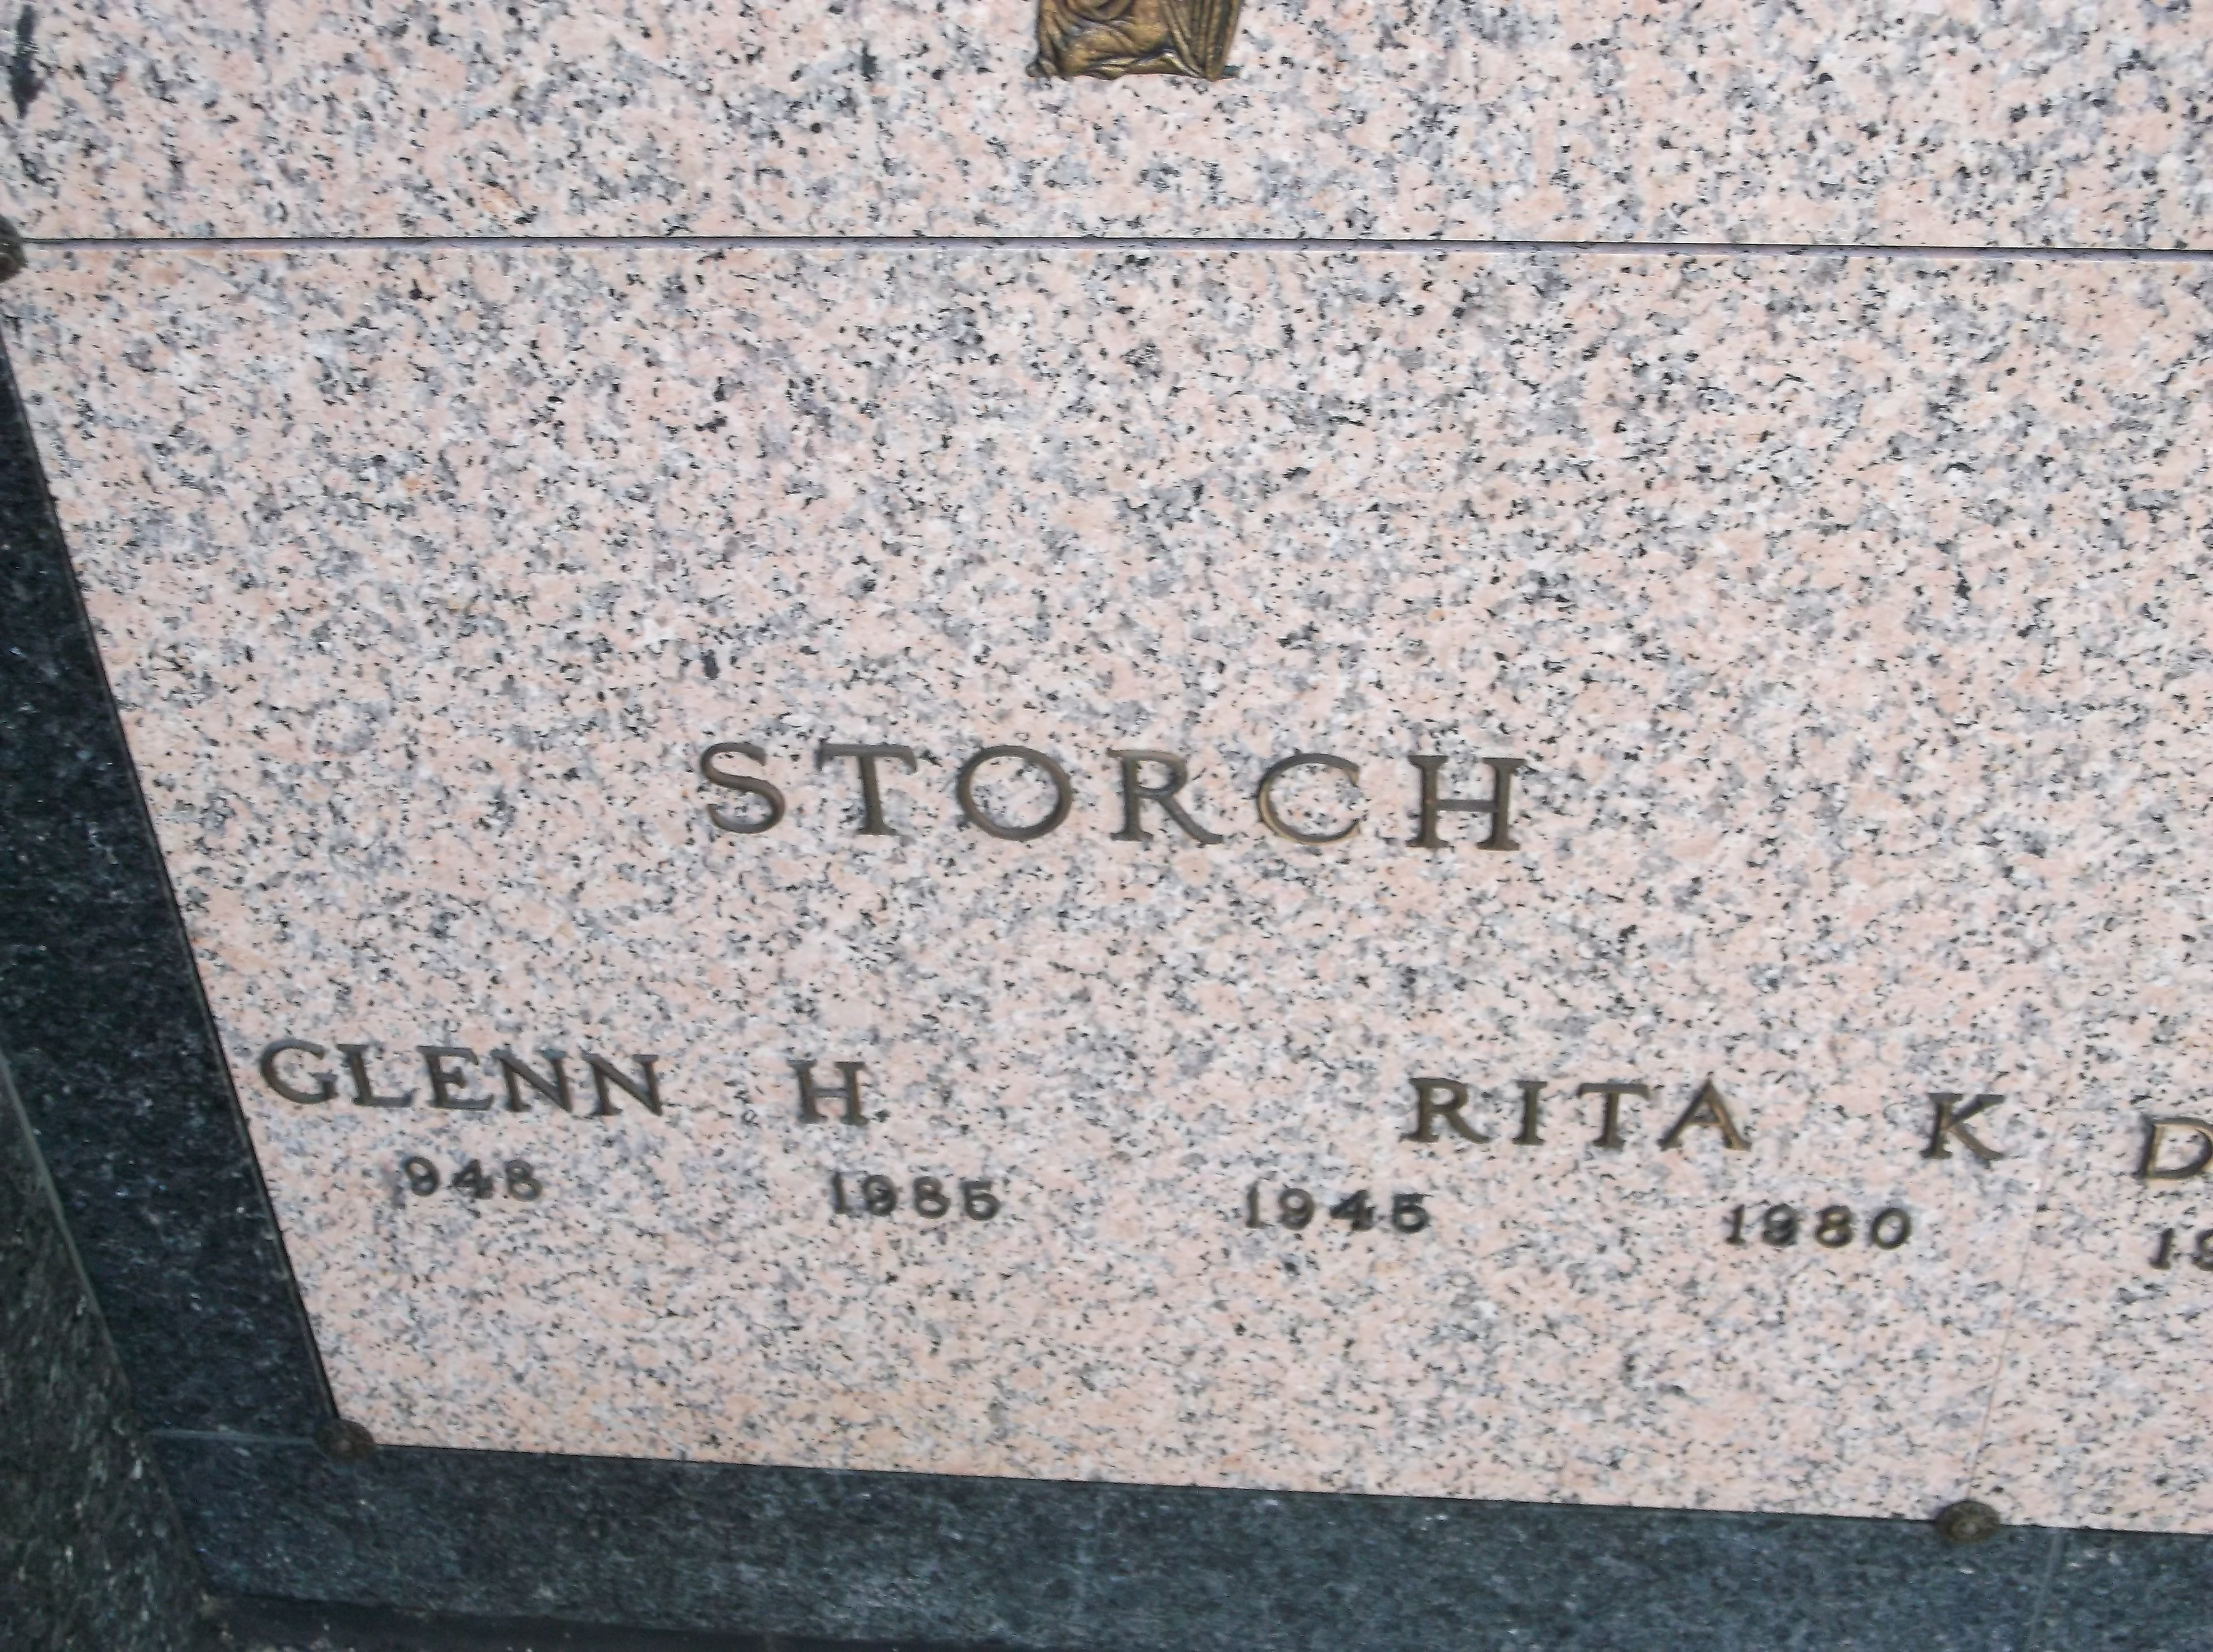 Rita K Storch